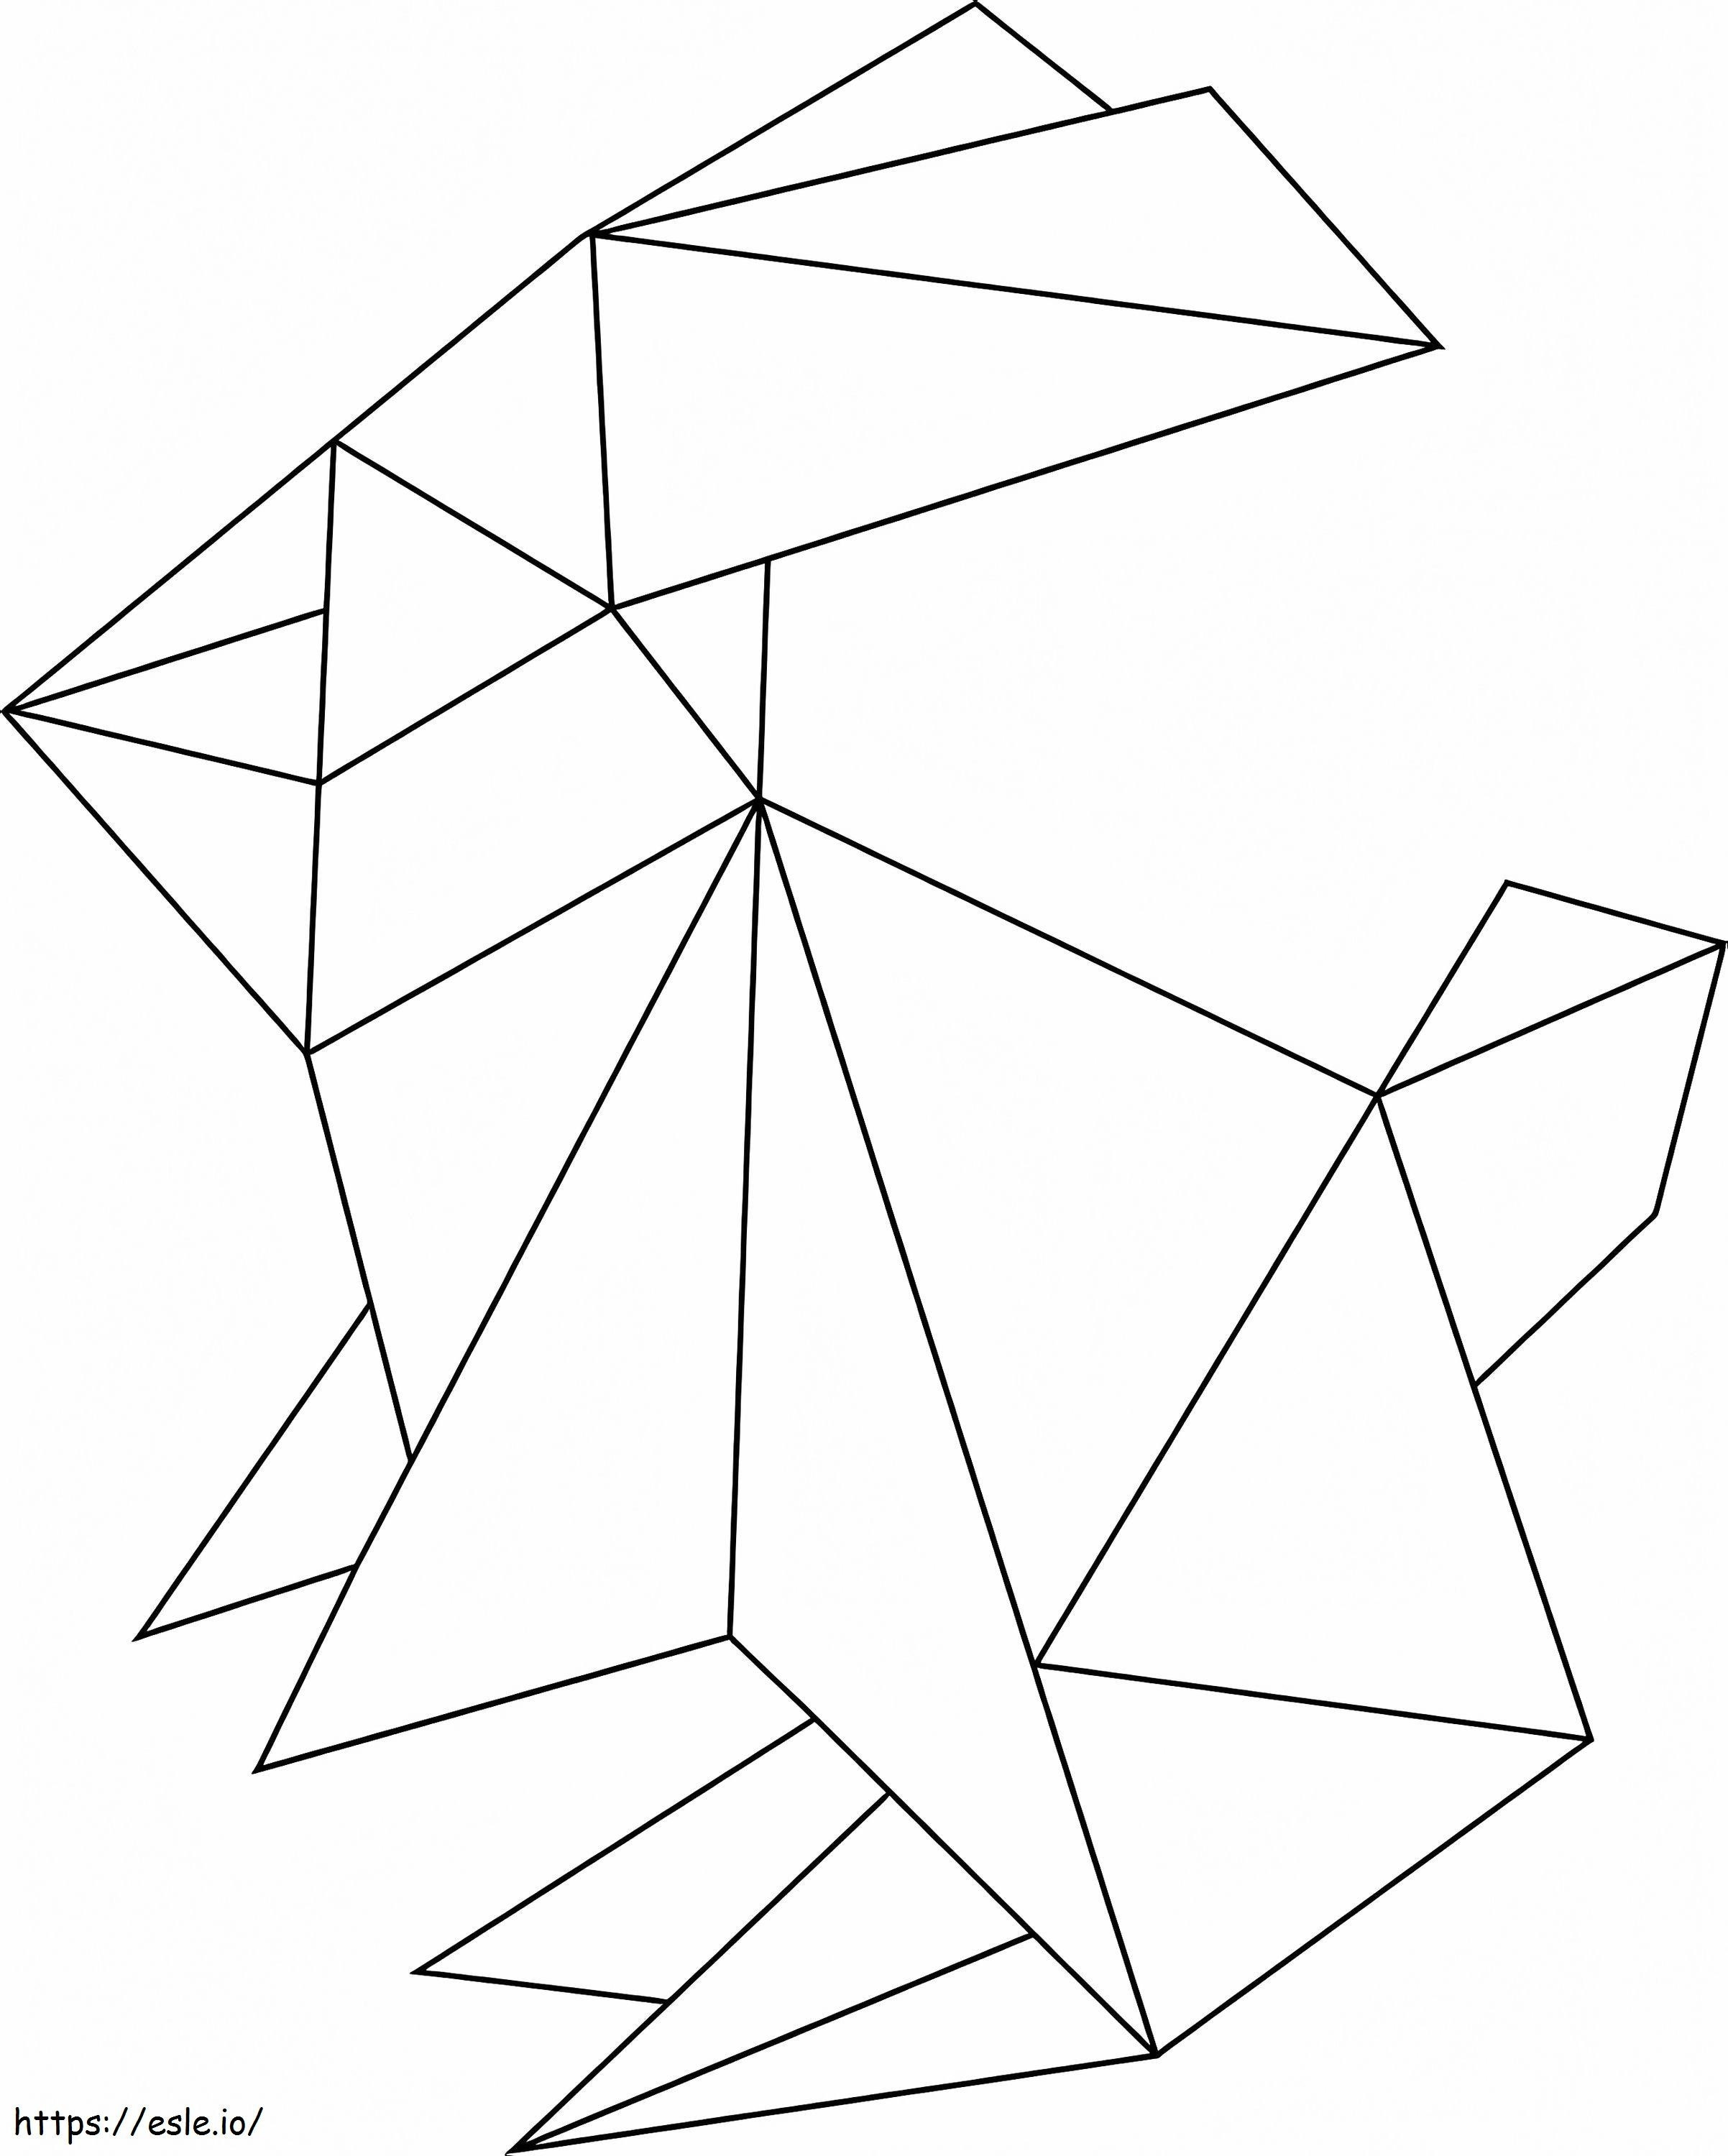 Coelho de origami para colorir